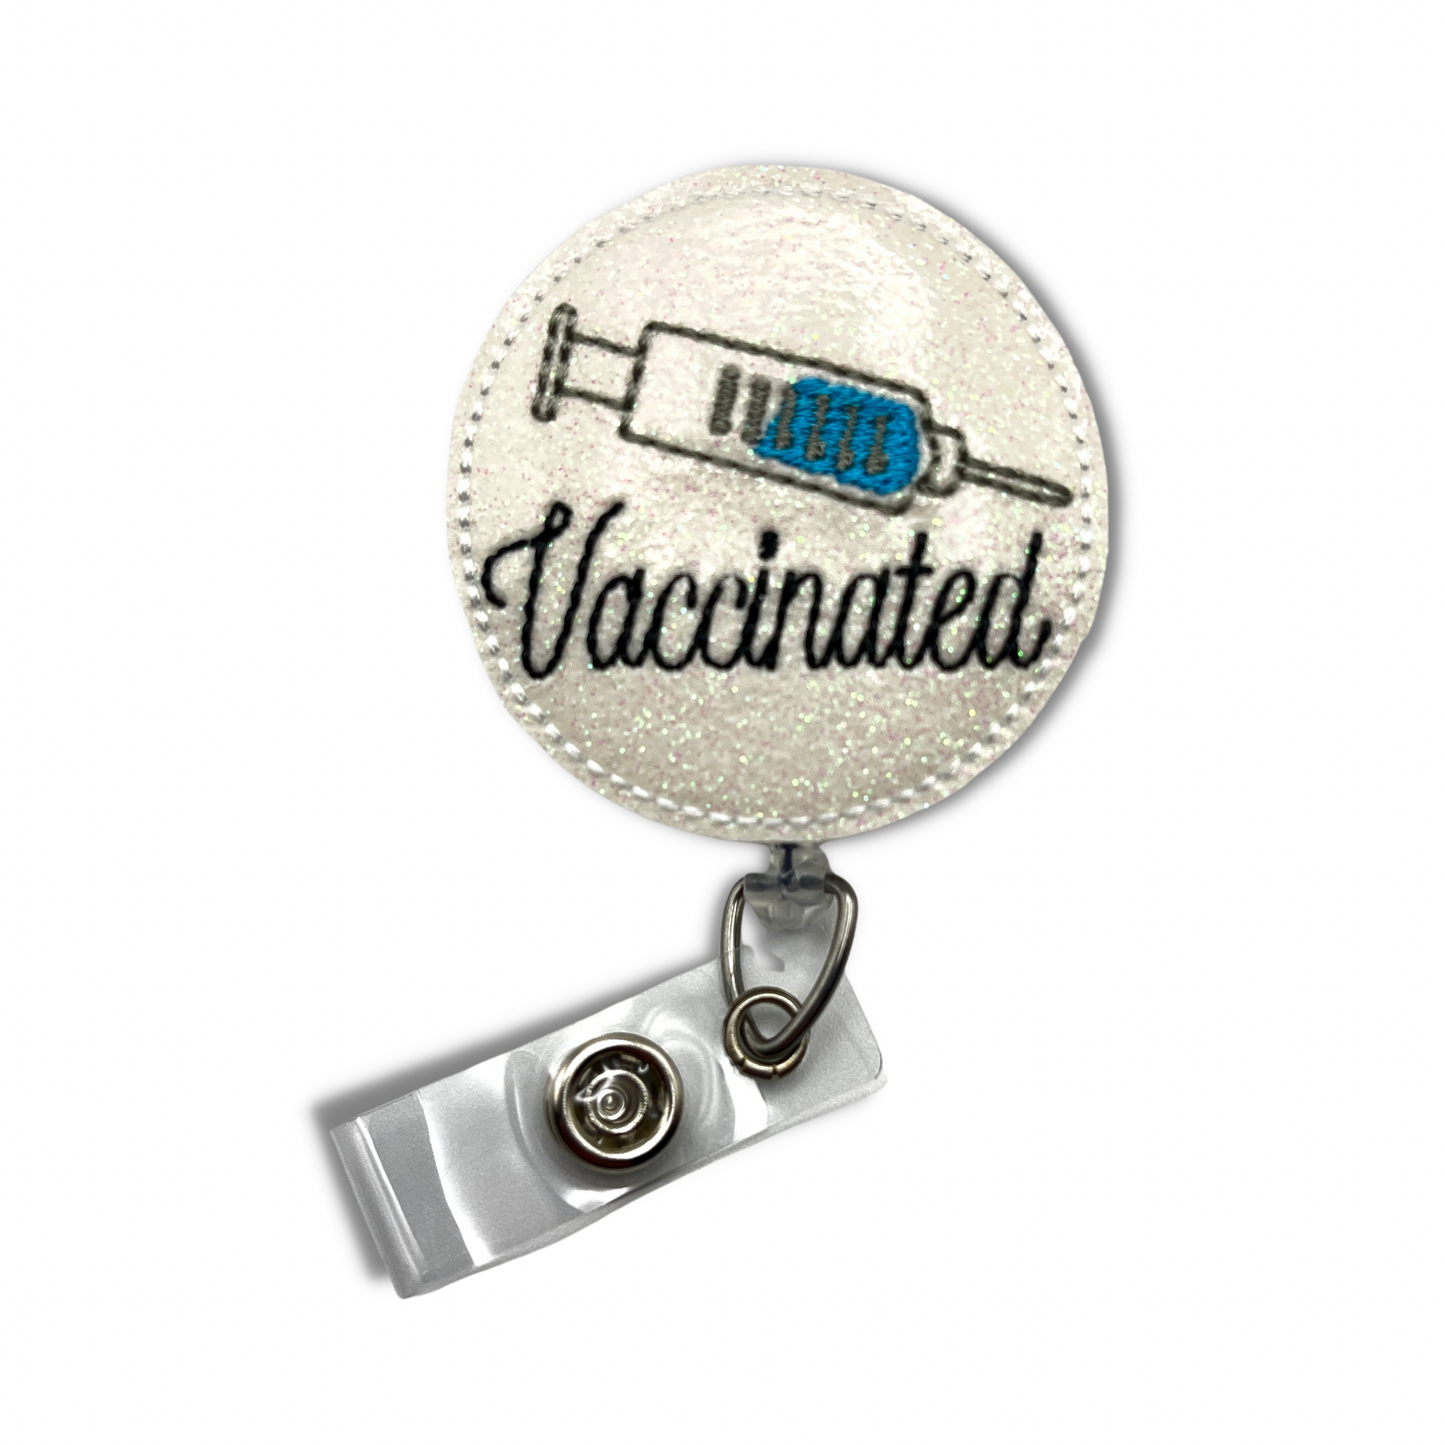 Vaccinated badge reel